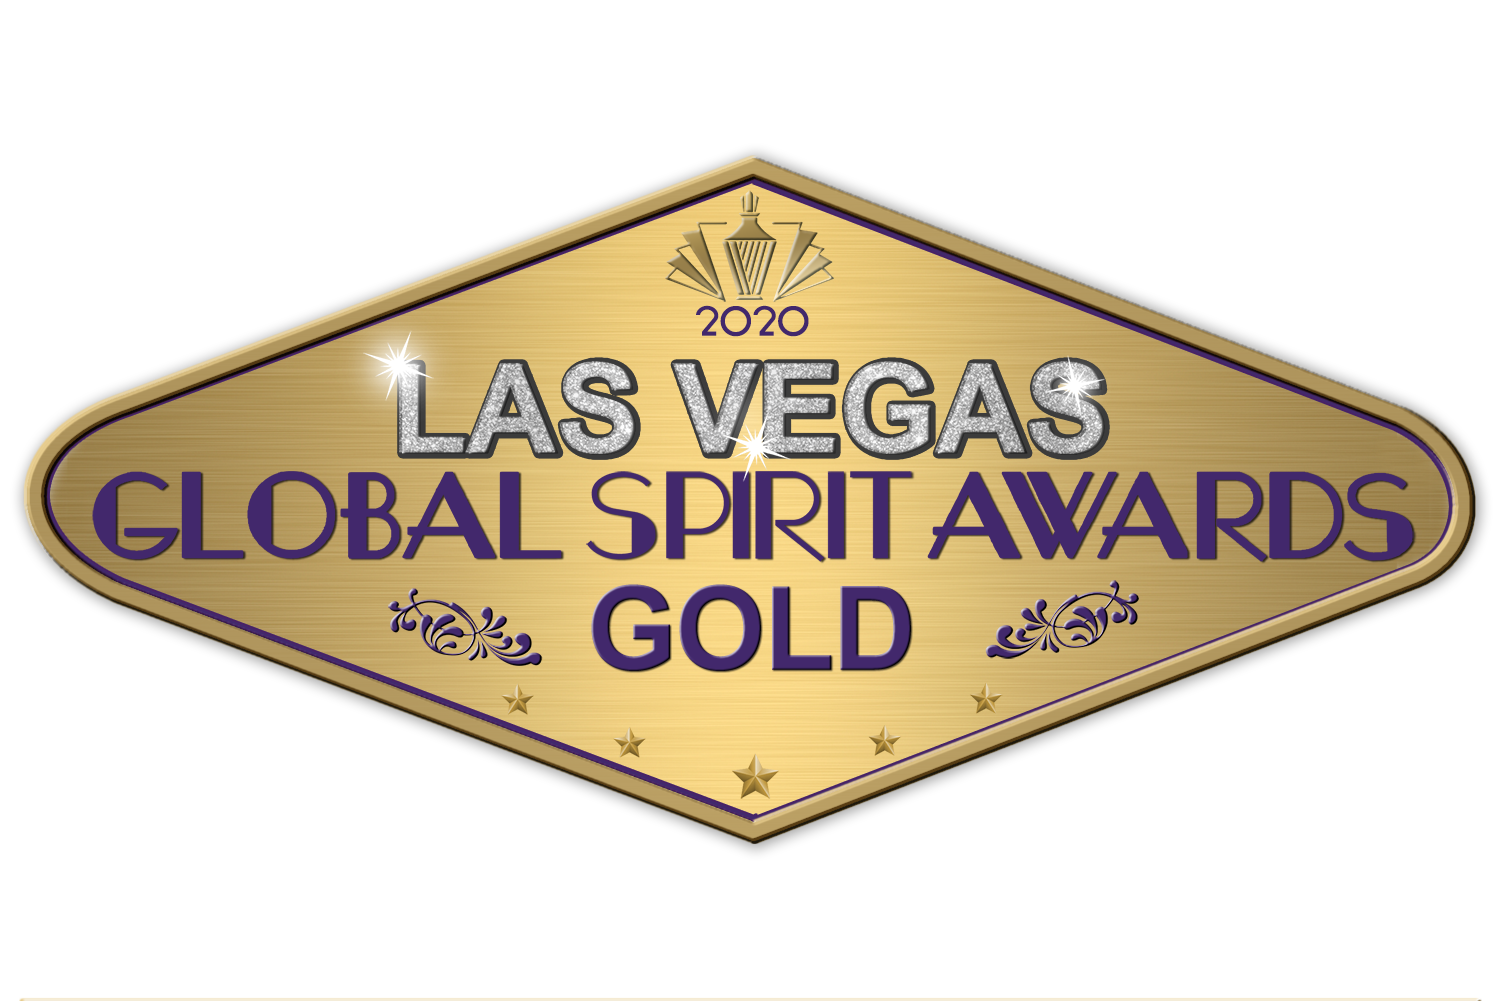 GOLD MEDAL in the 2020 Las Vegas Global Spirit Awards